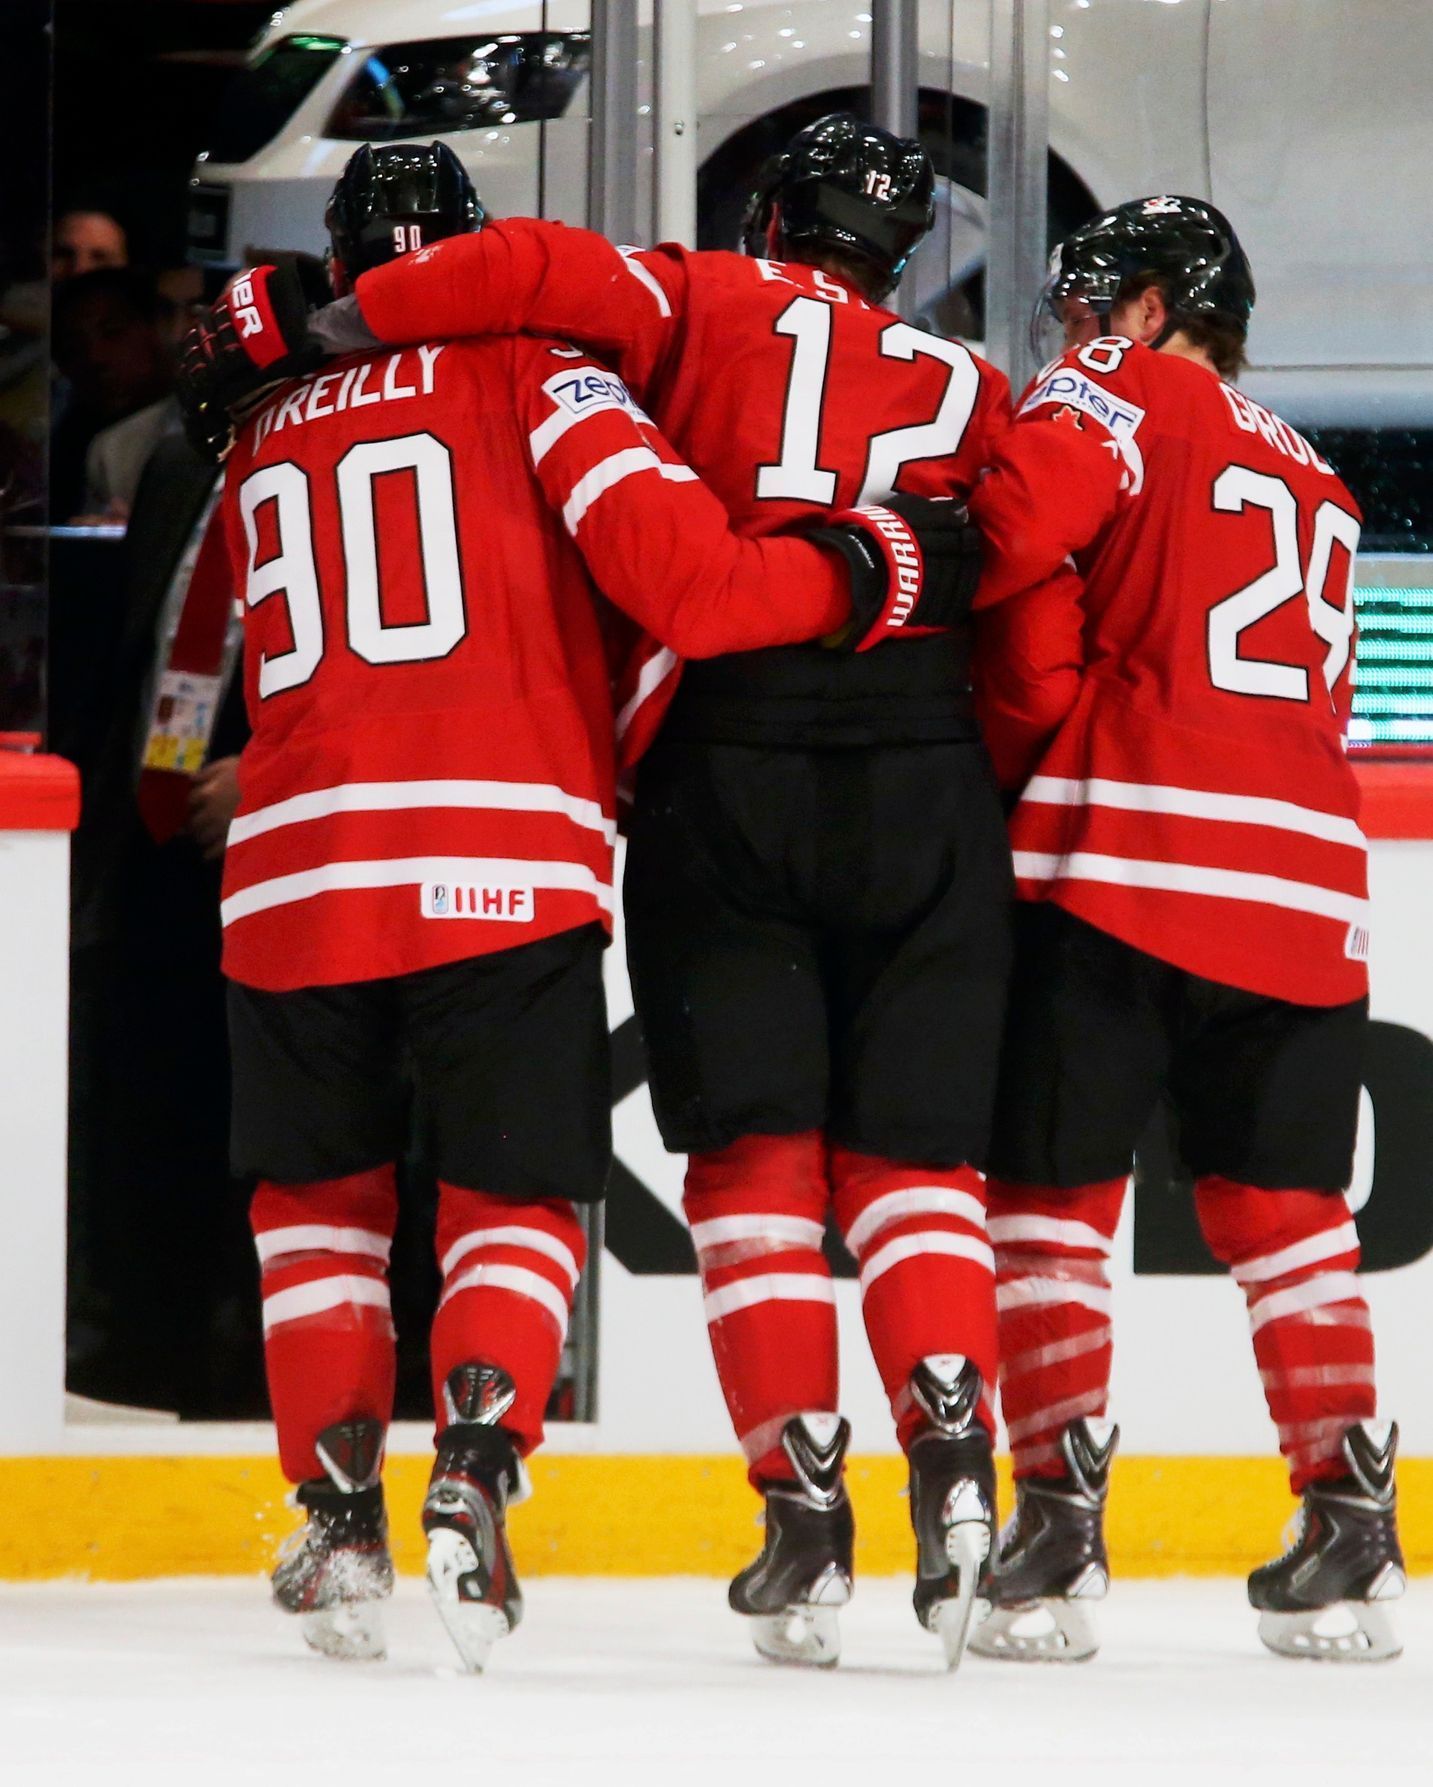 Hokej, MS 2013, Švédsko - Kanada: zraněný Eric Staal